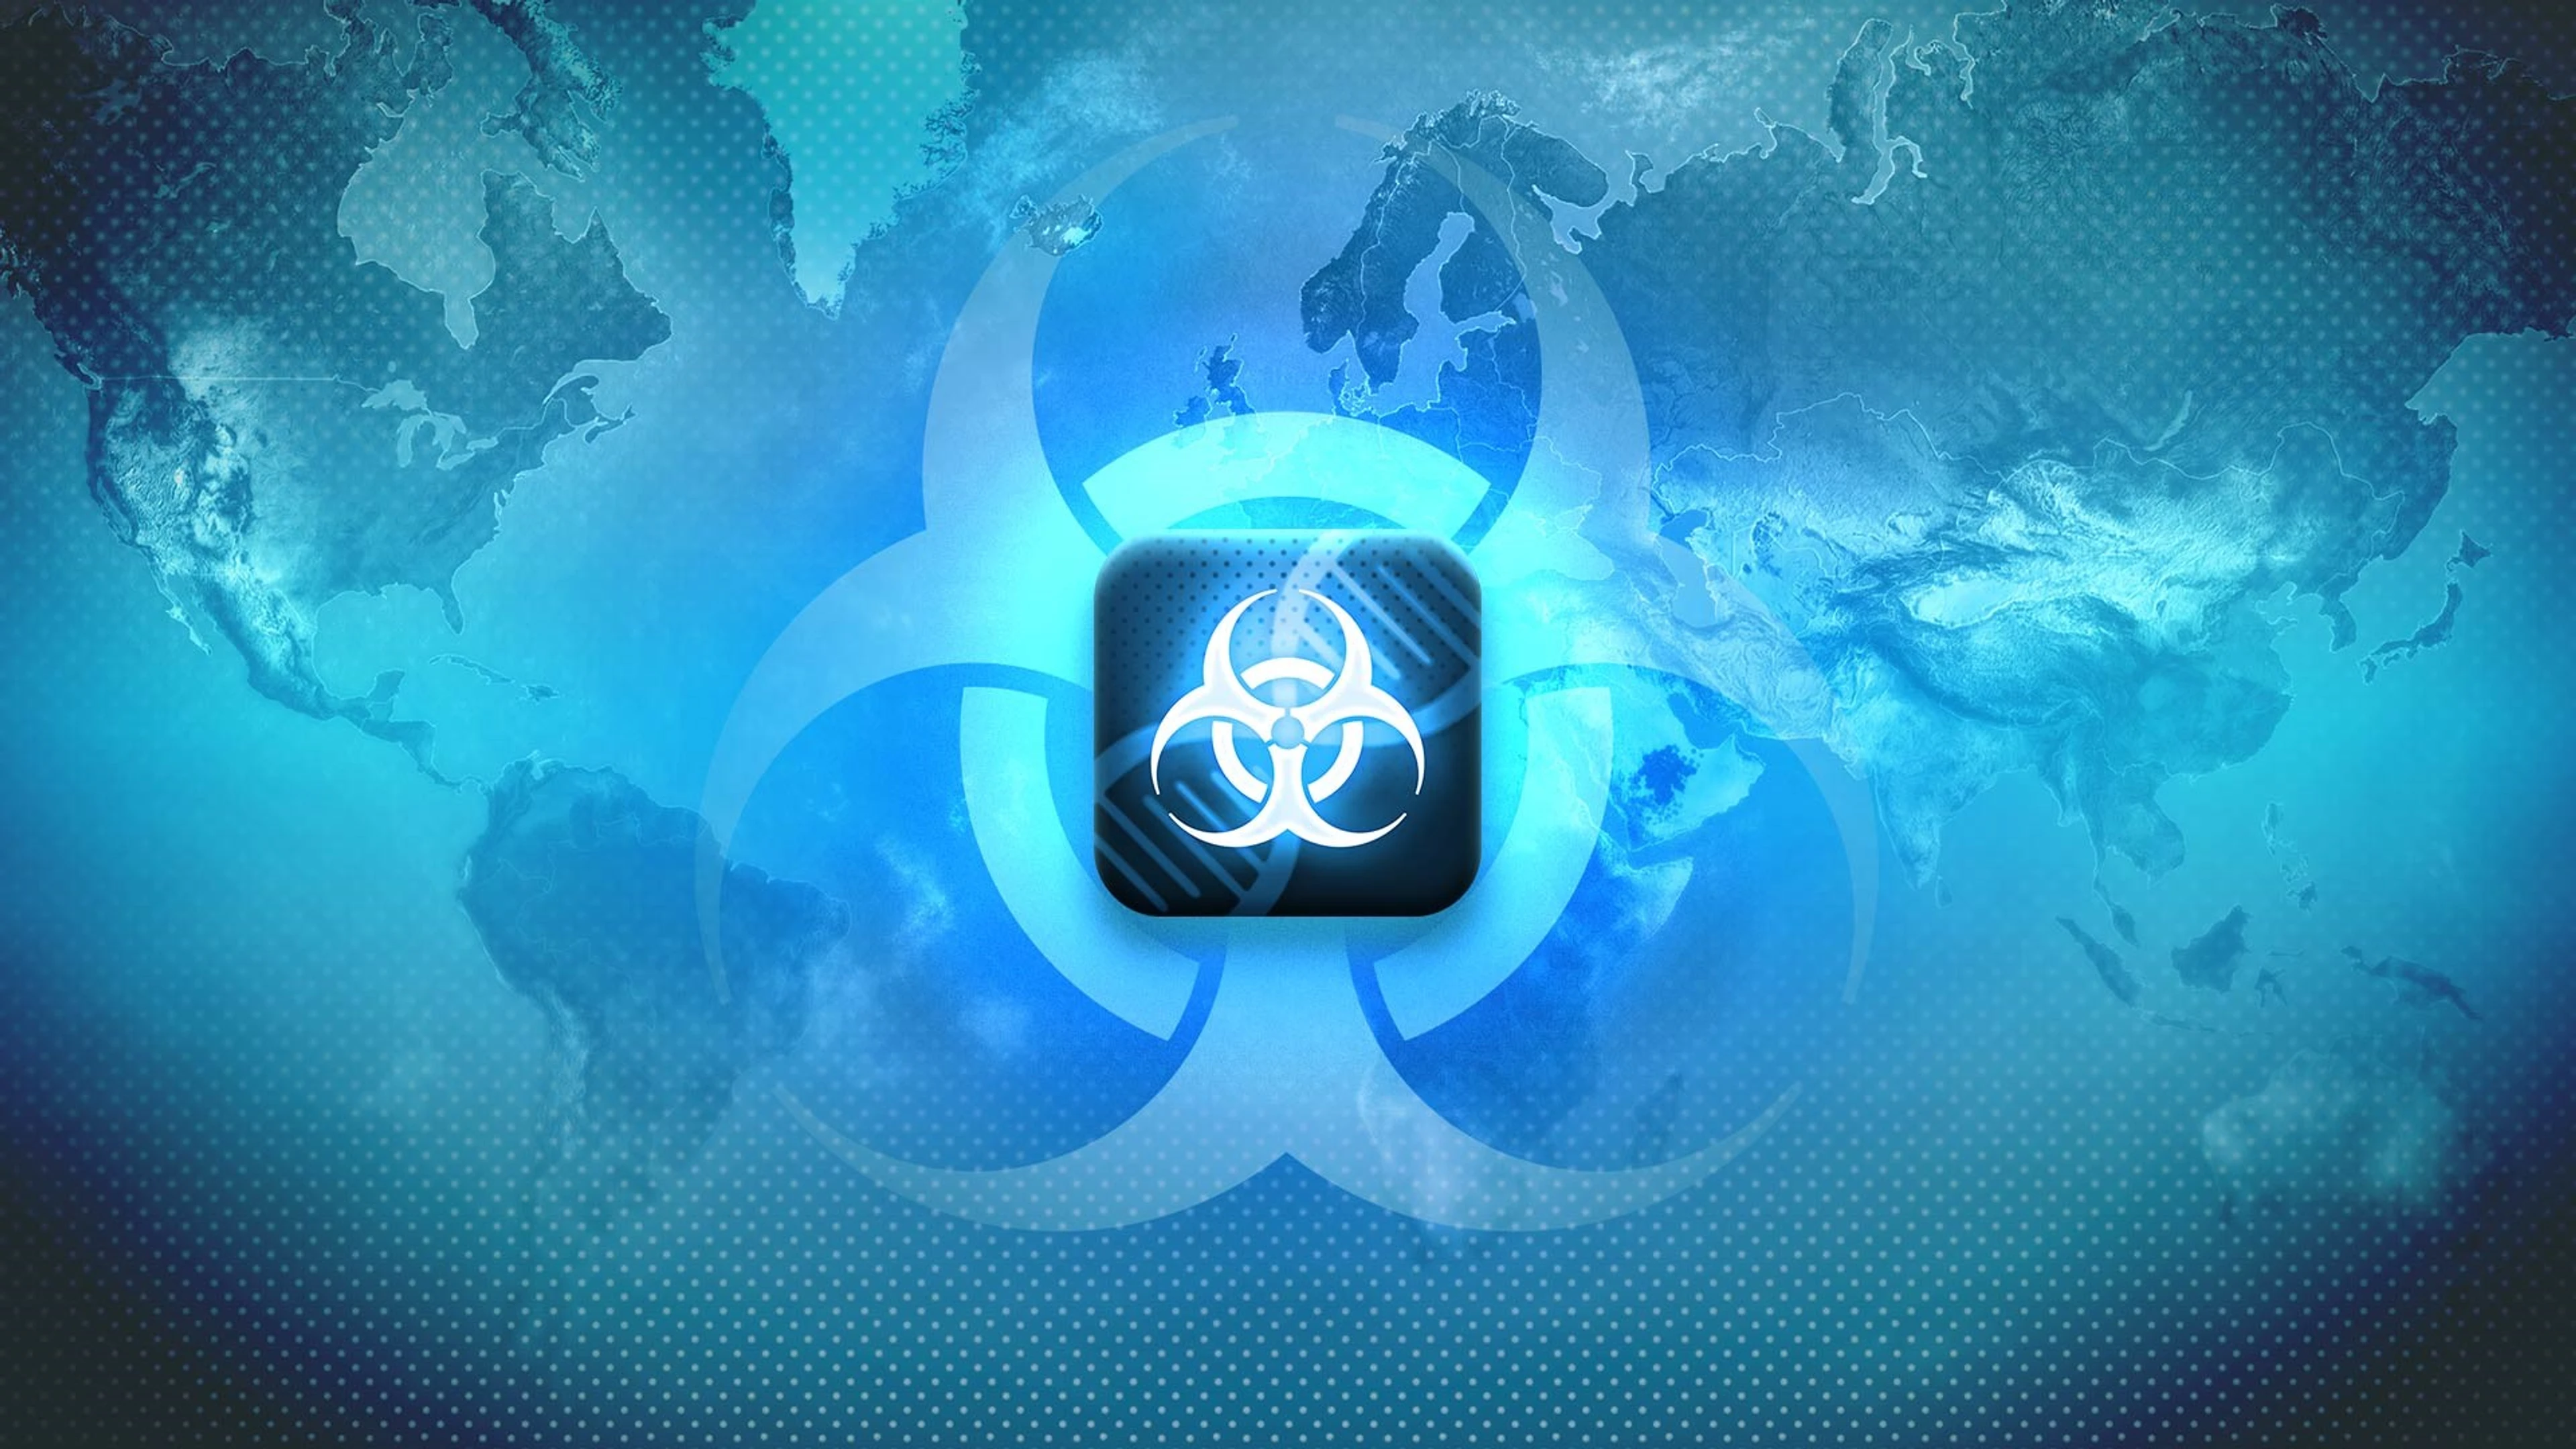 An image of the Plague Inc logo above a world map